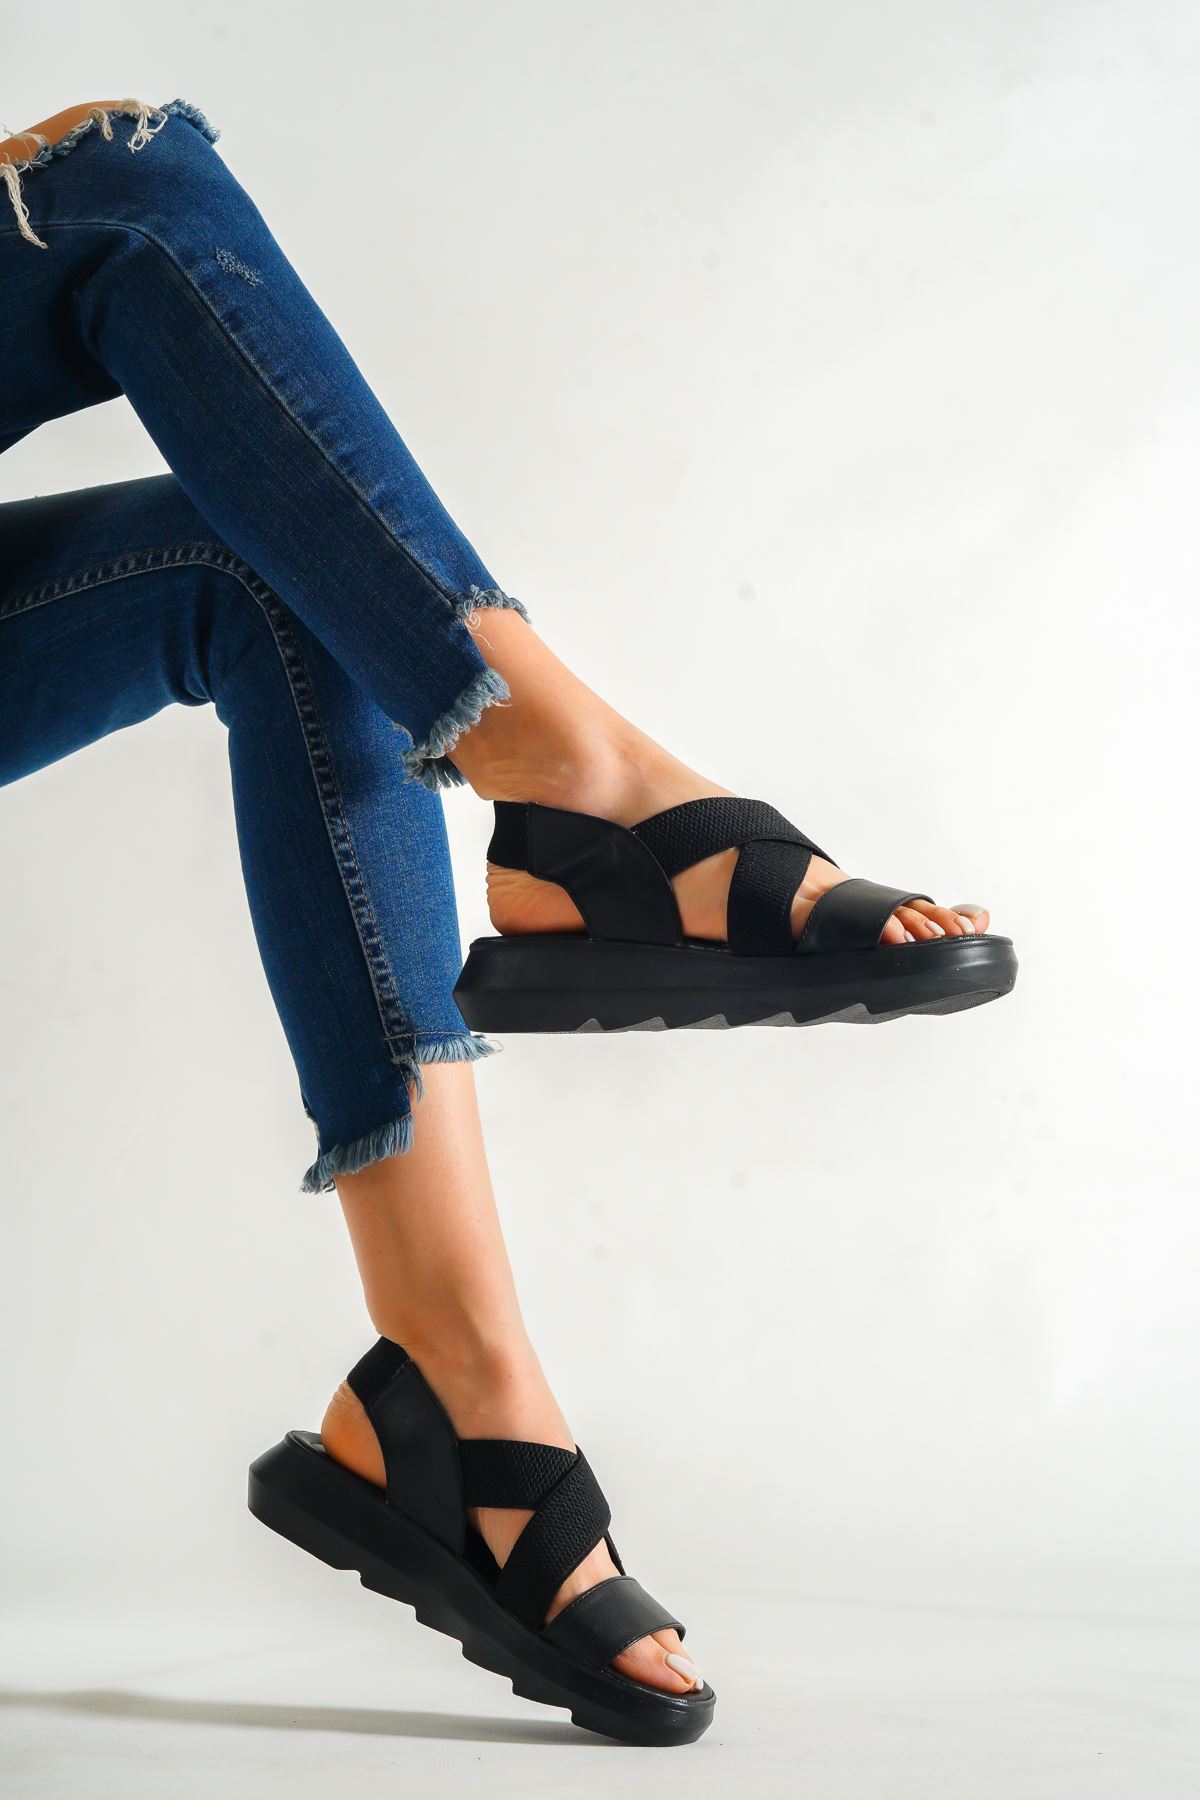 Sydney Siyah Lastikli  Cilt Sandalet